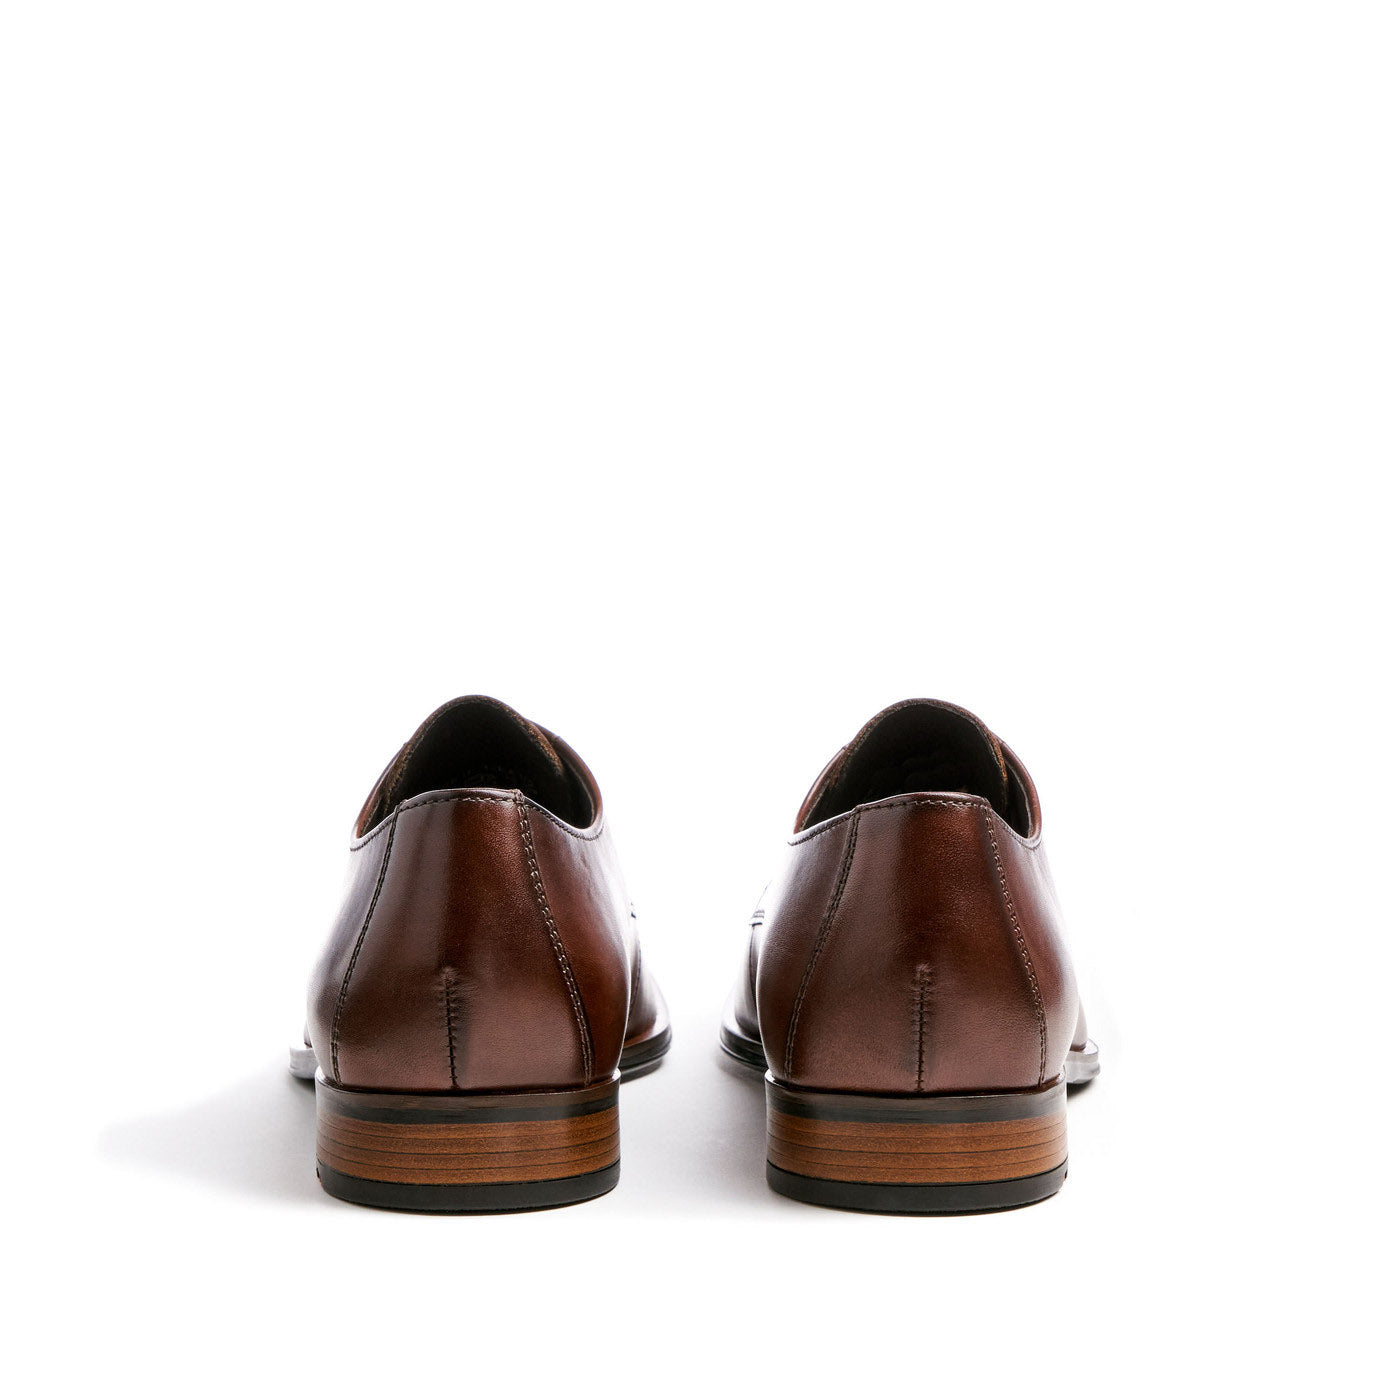 Heel view of the brown formal men's shoes.